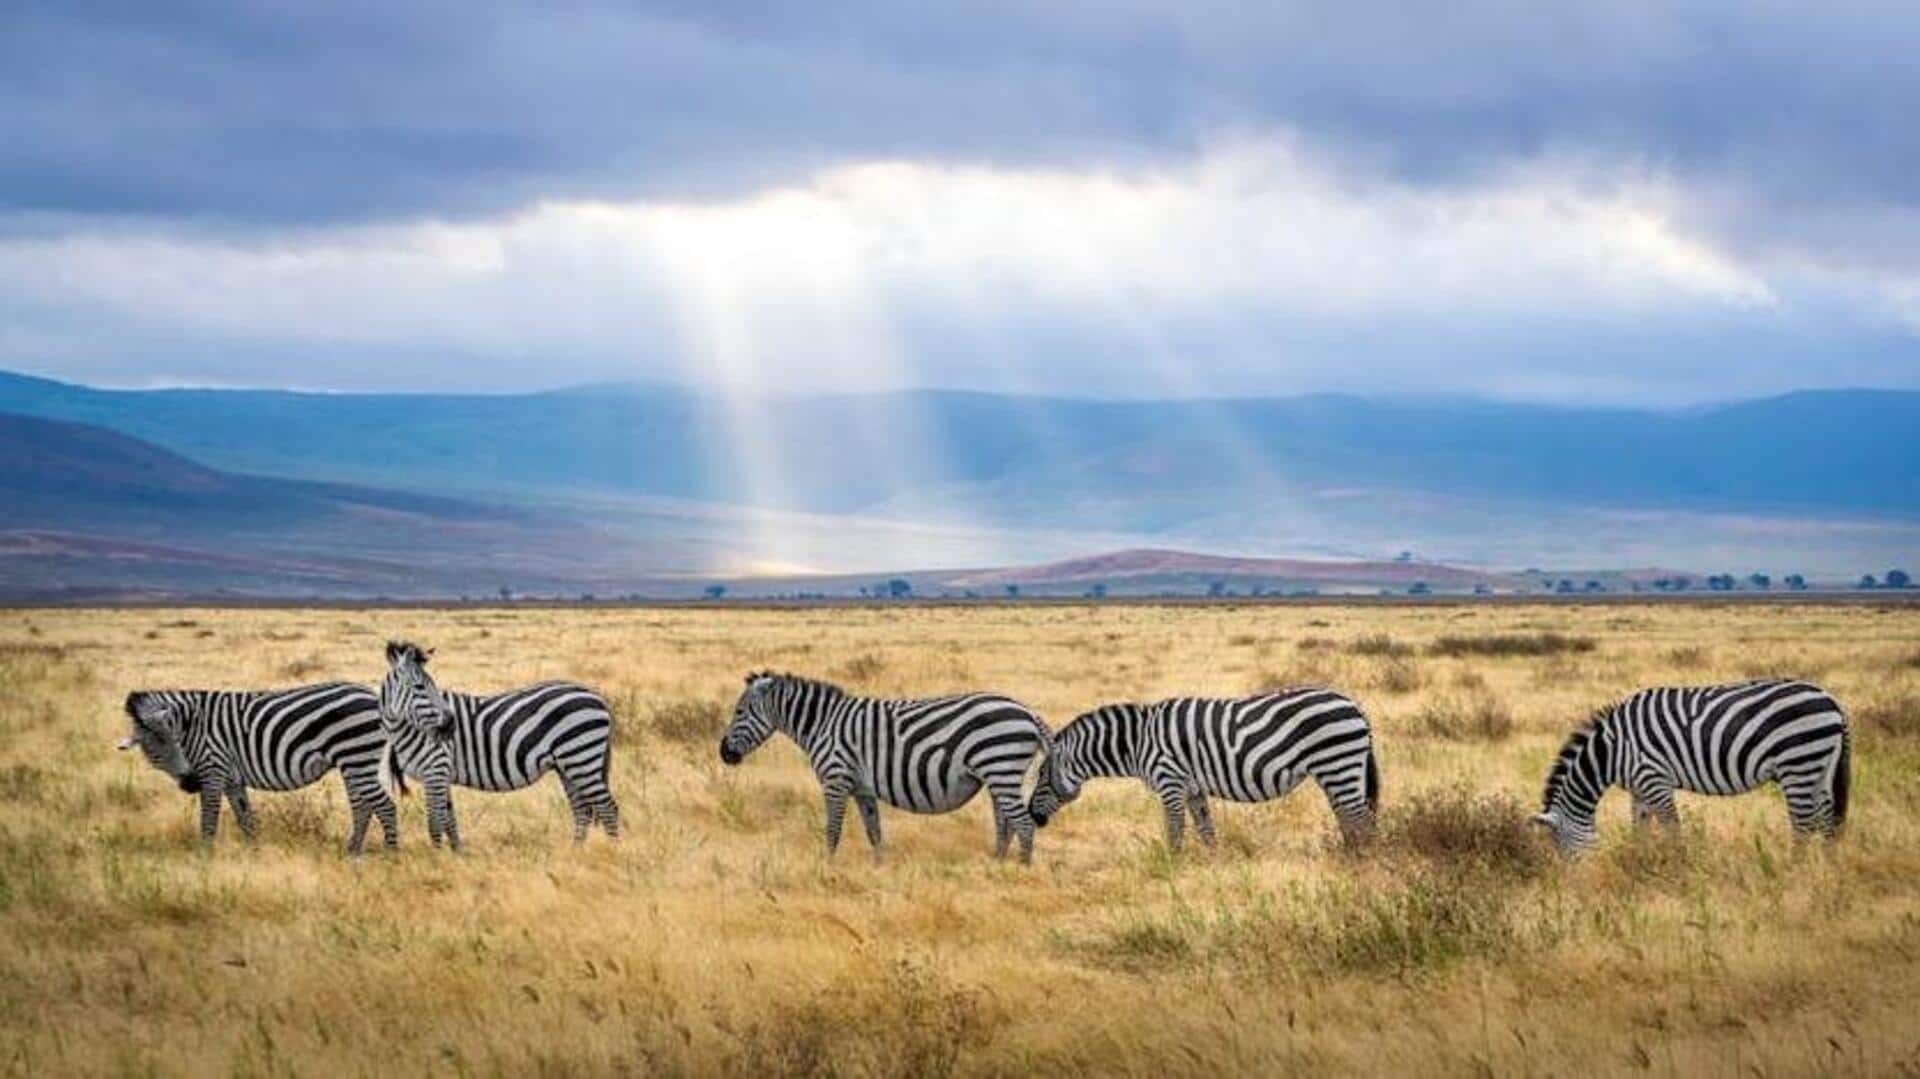 Serengeti safari: Explore Tanzania's untamed wilderness